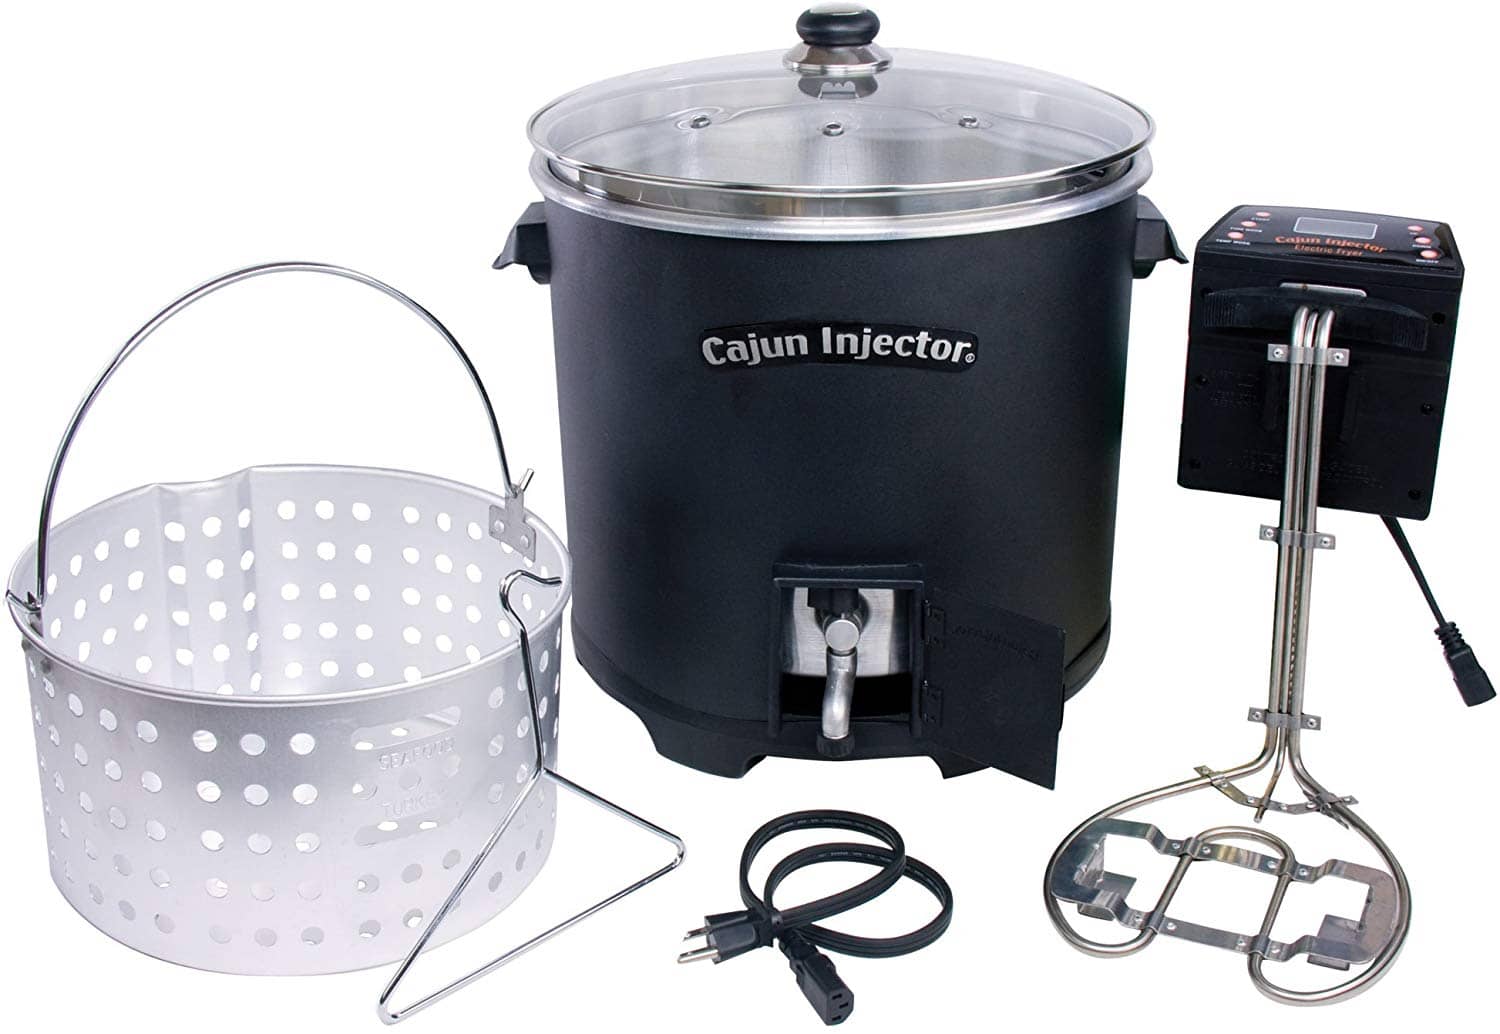 Cajun Injector Electric Turkey Fryer